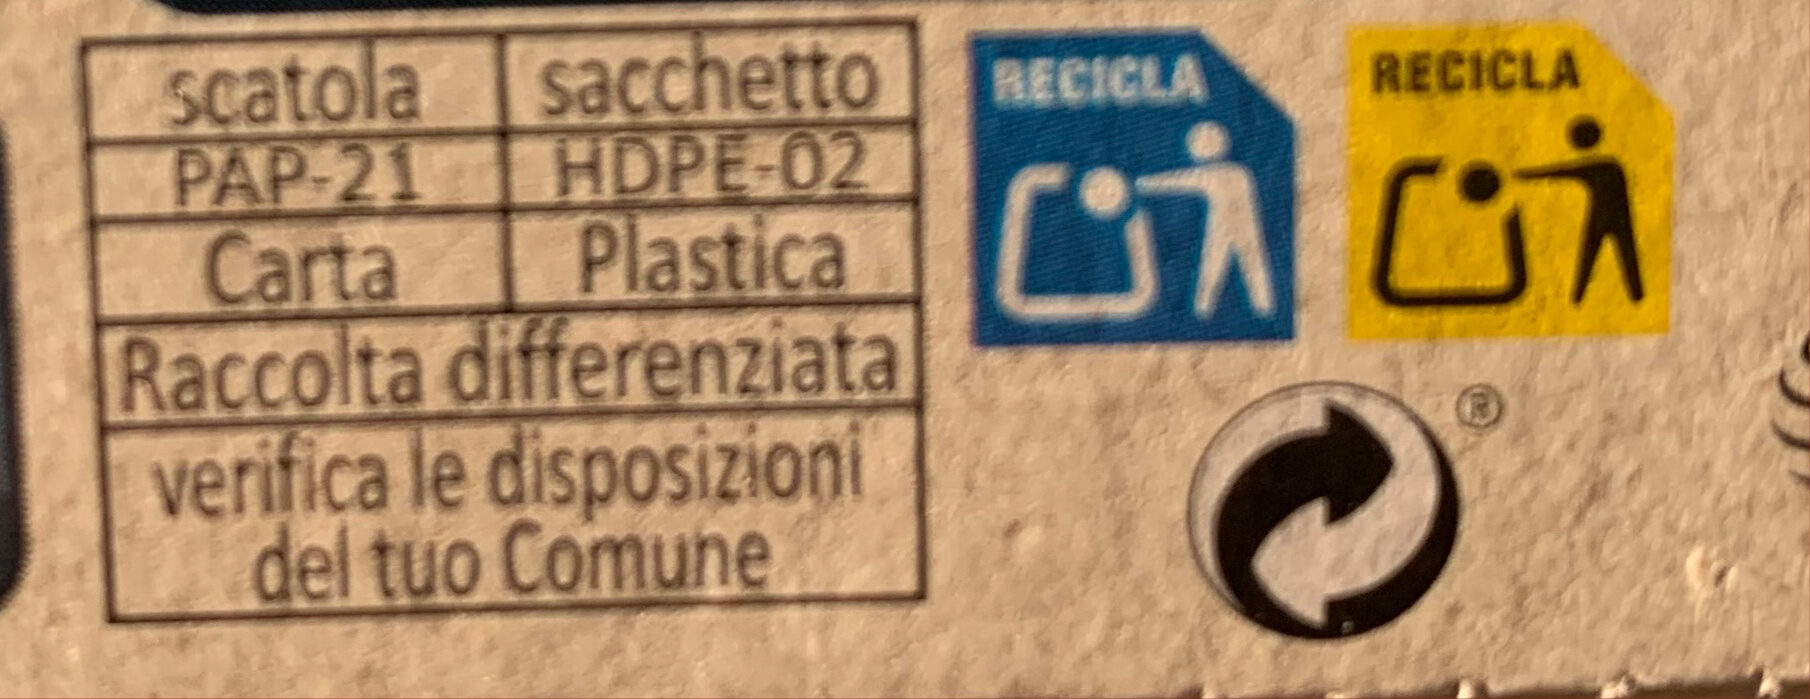 Quaker Cruesli Frutta Secca - Recycling instructions and/or packaging information - it